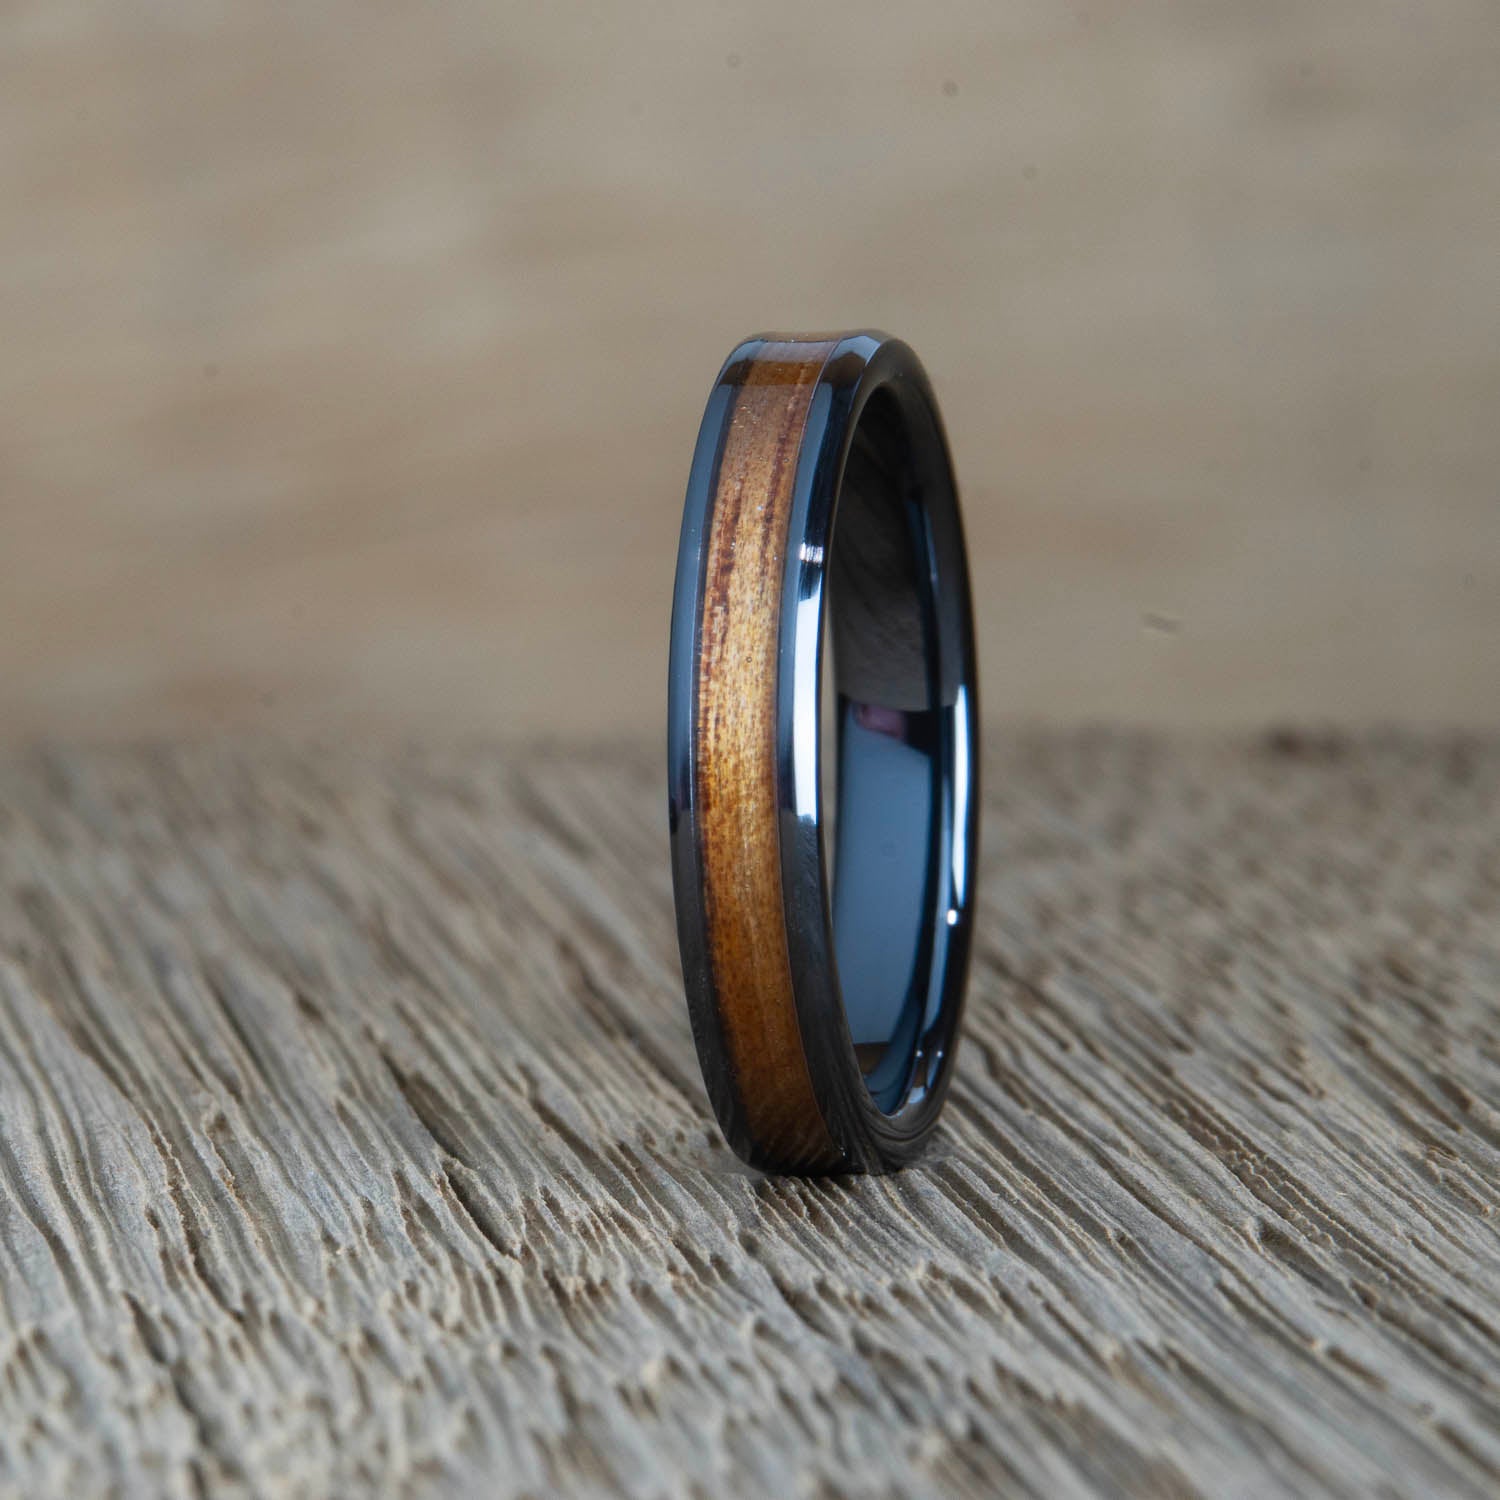 "The island" Koa wood inlaid Black ring